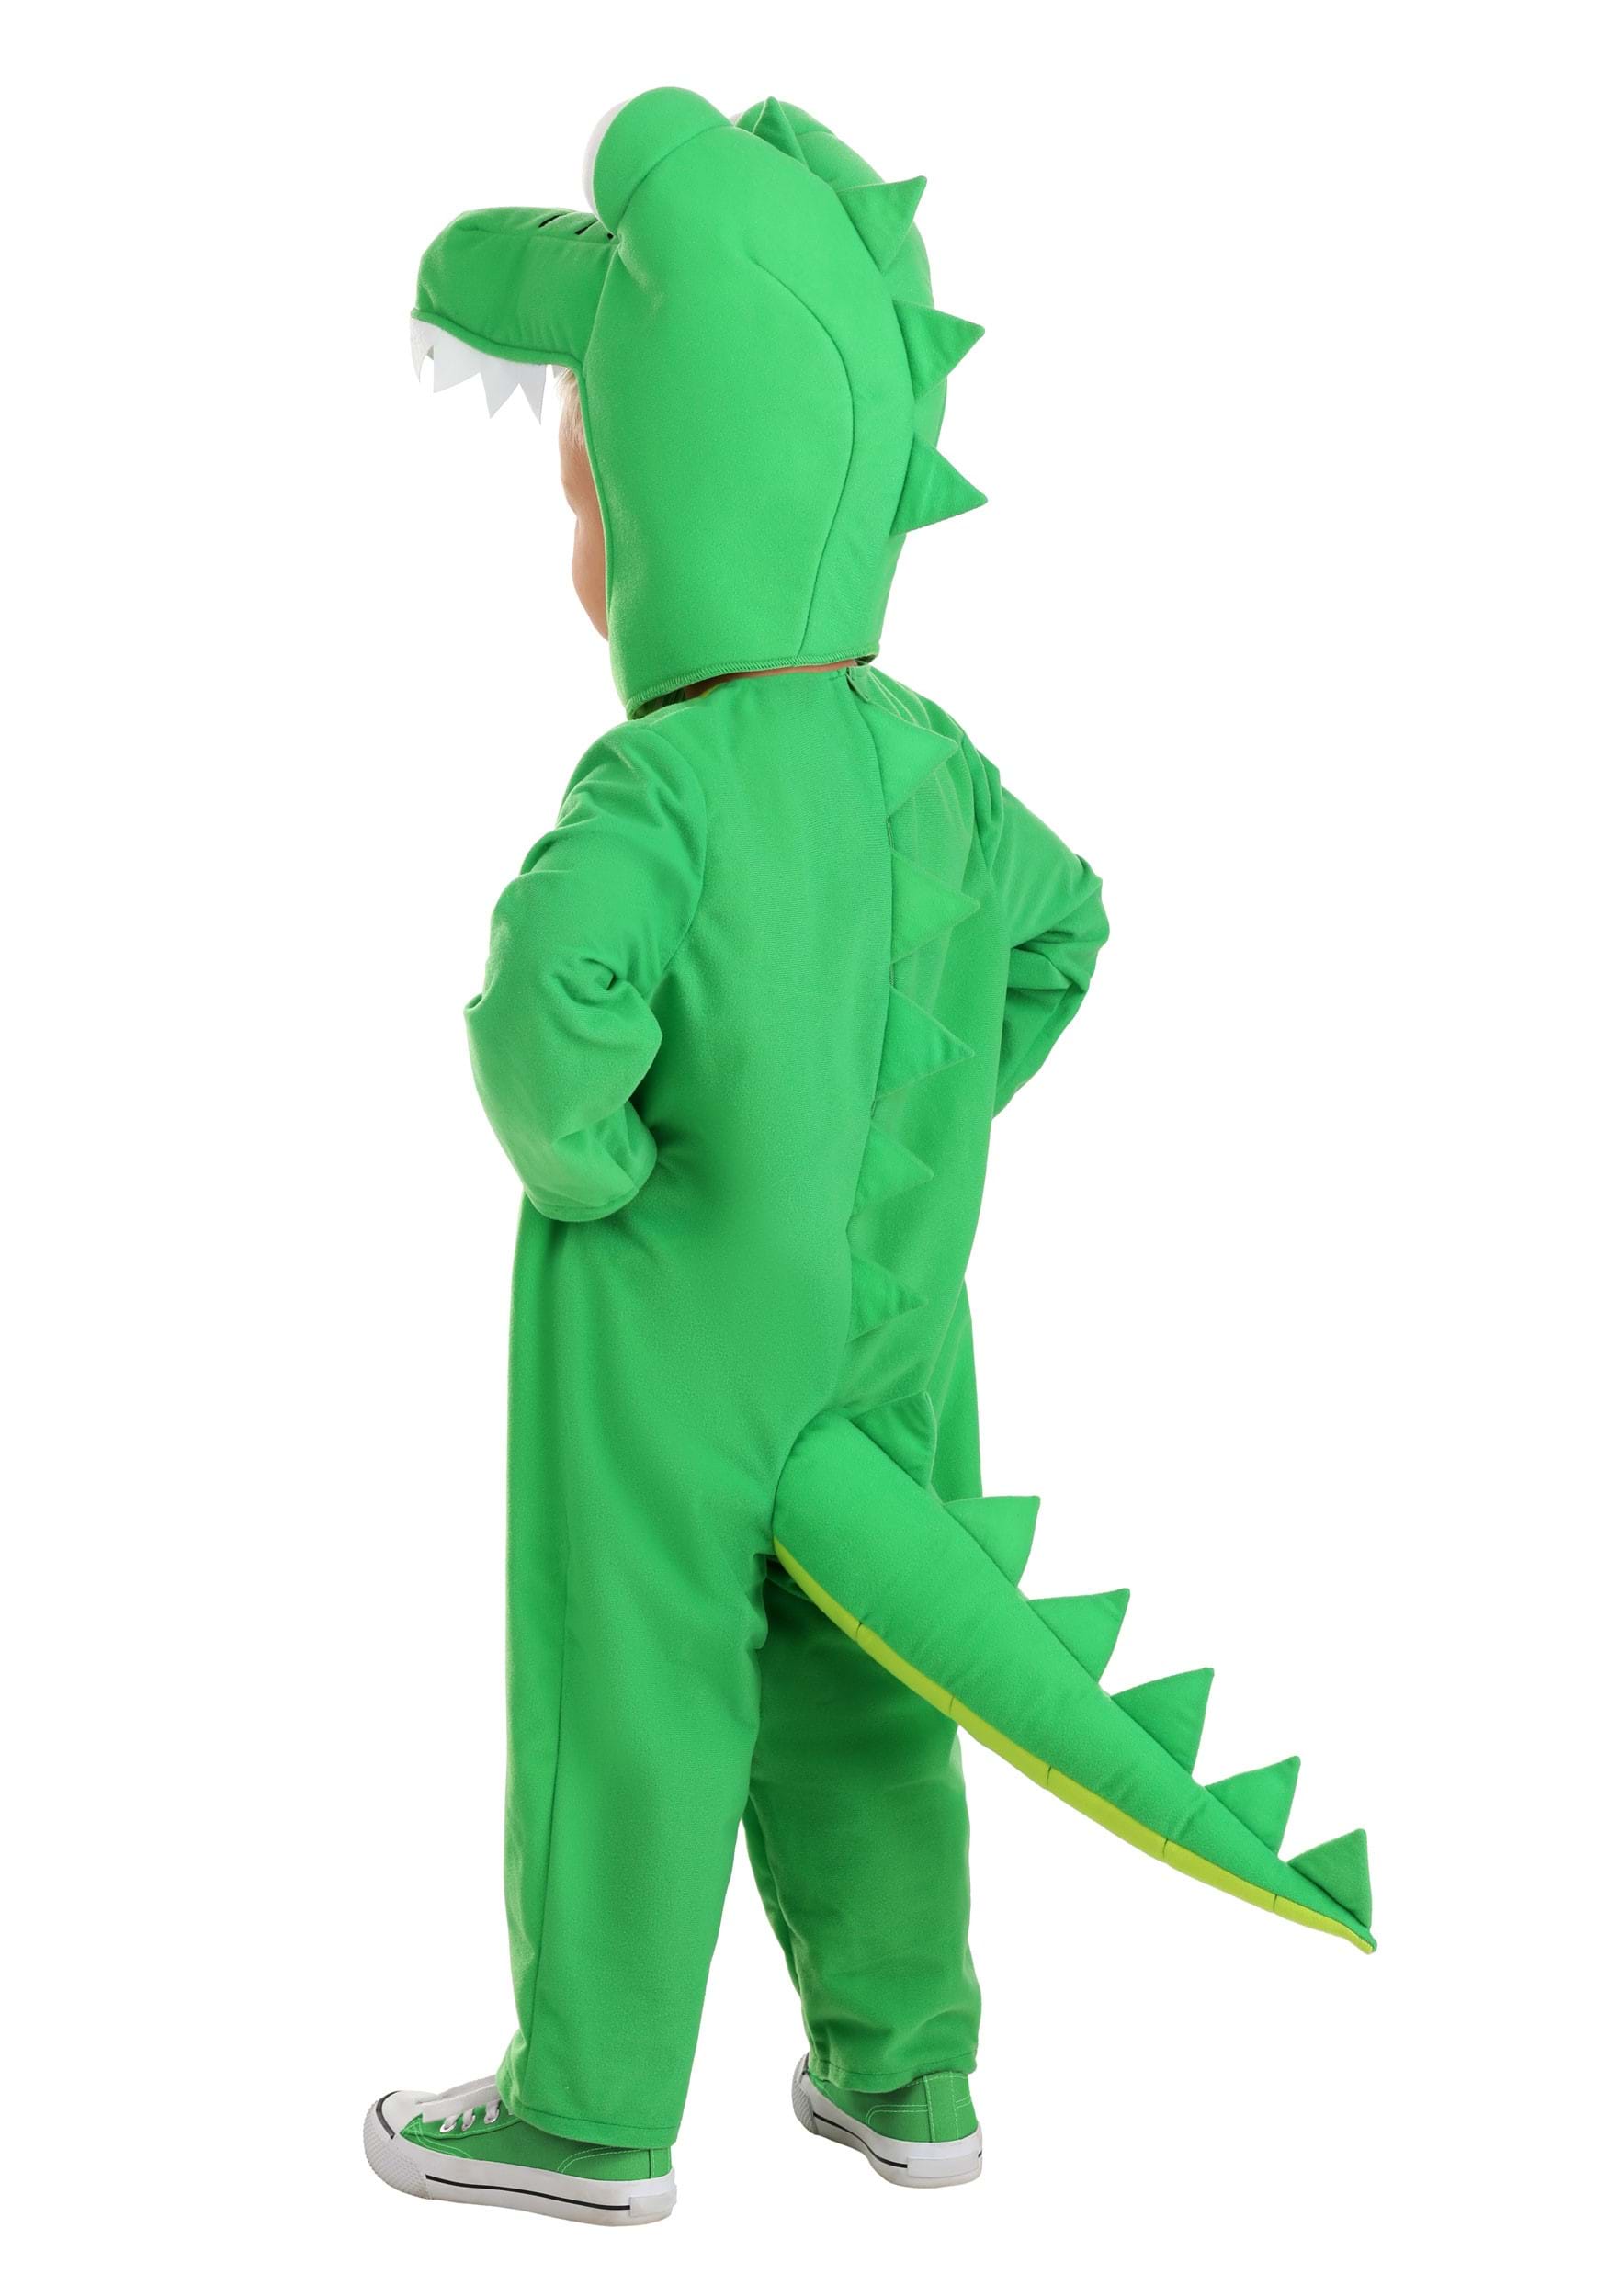 Goofy Gator Toddler's Costume